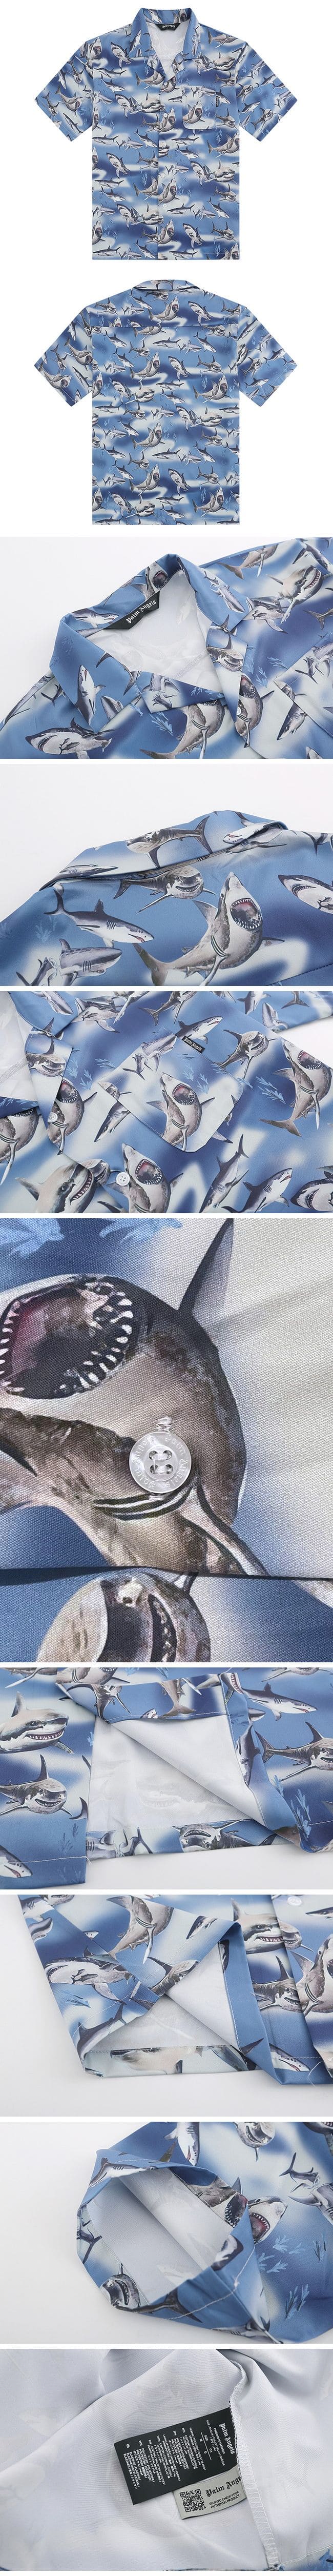 Palm angles Shark Print Shirt パームエンジェルス シャーク プリント シャツ